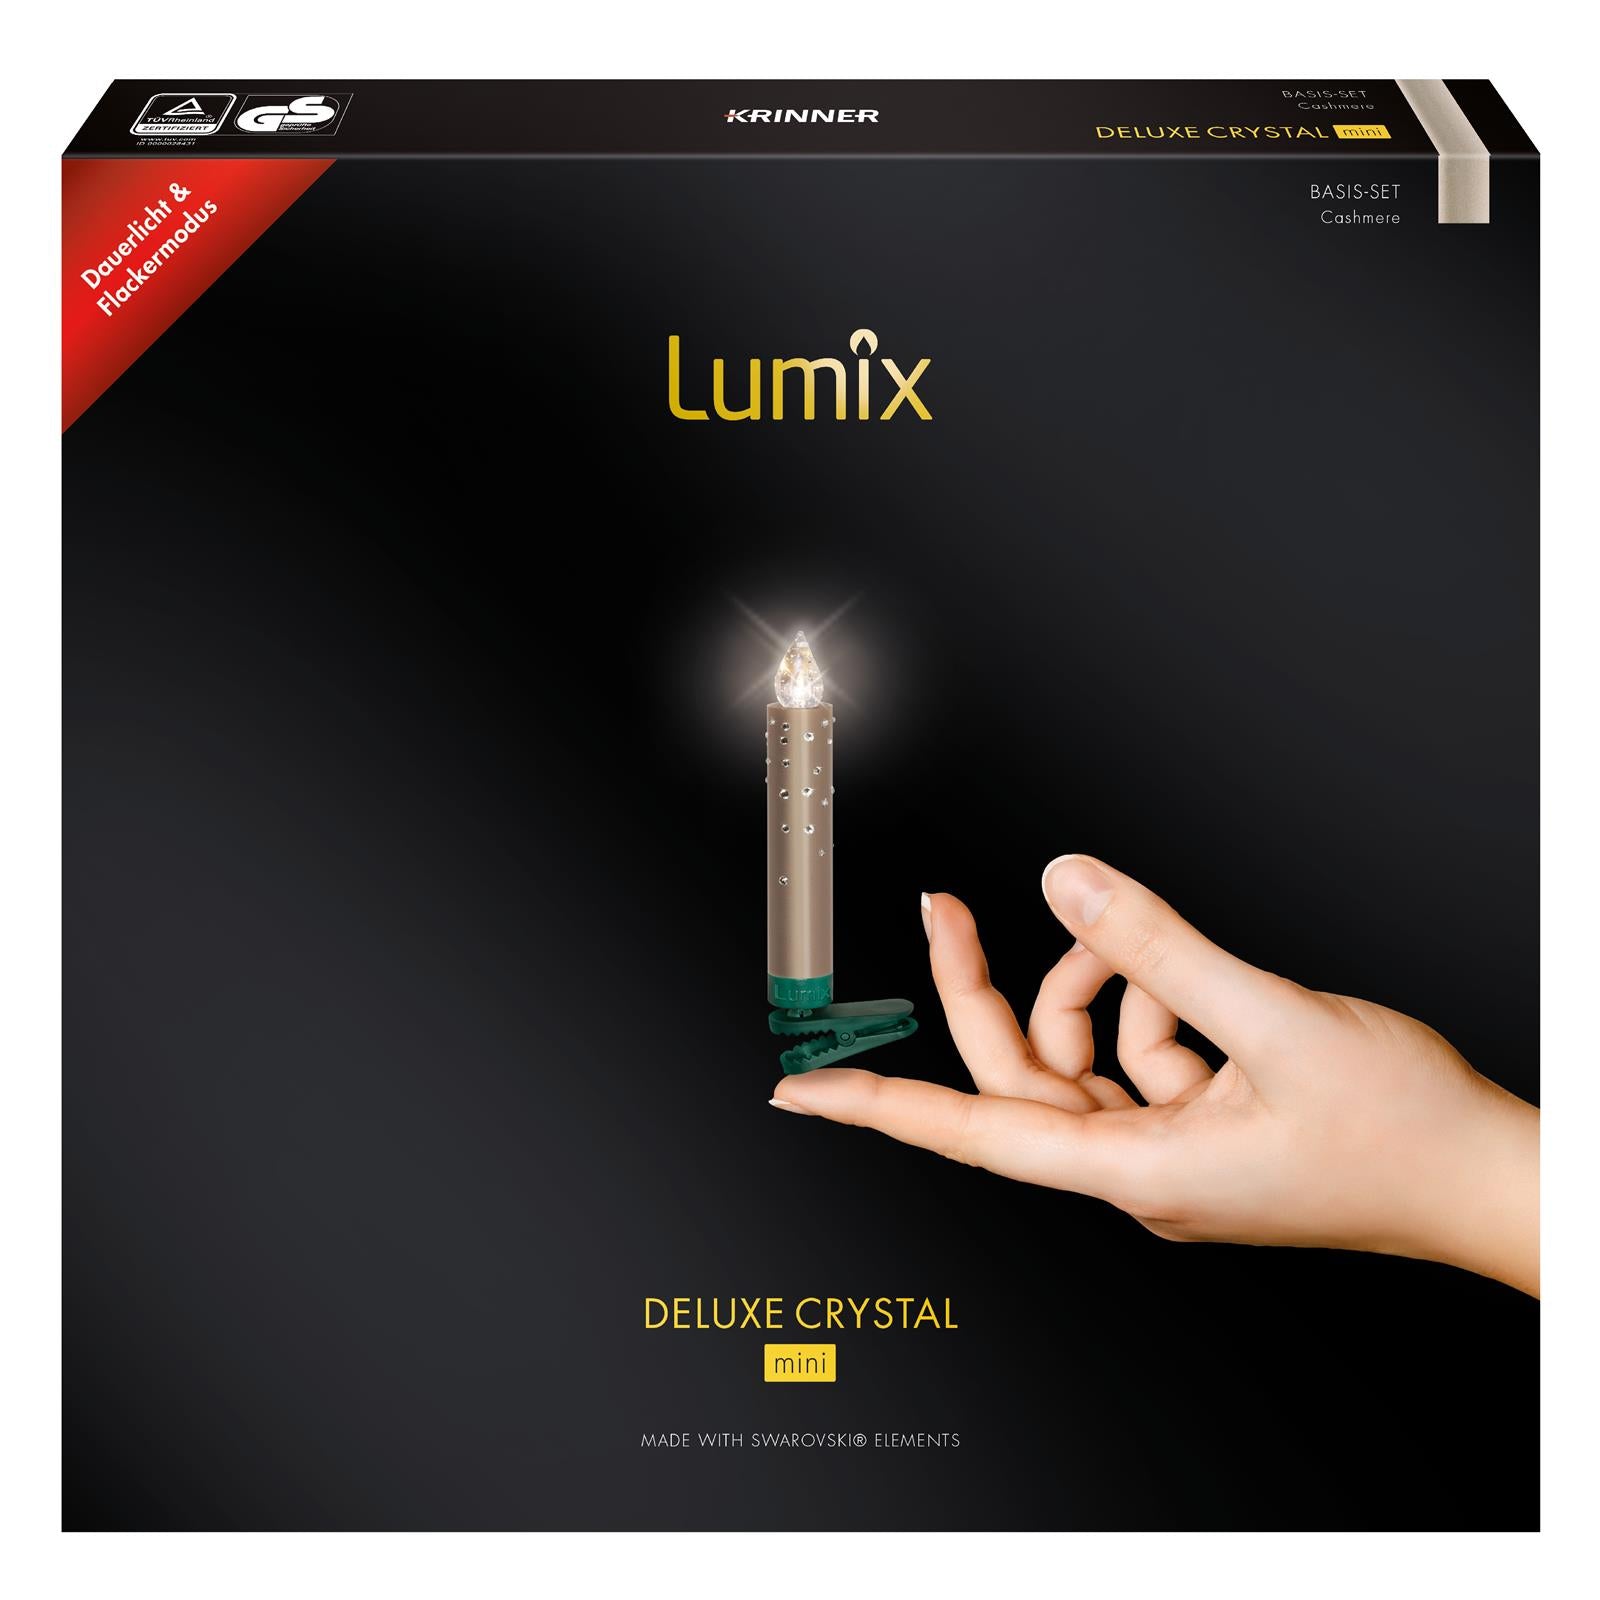 LUMIX SuperLight Crystal Cashmere Mini Basis